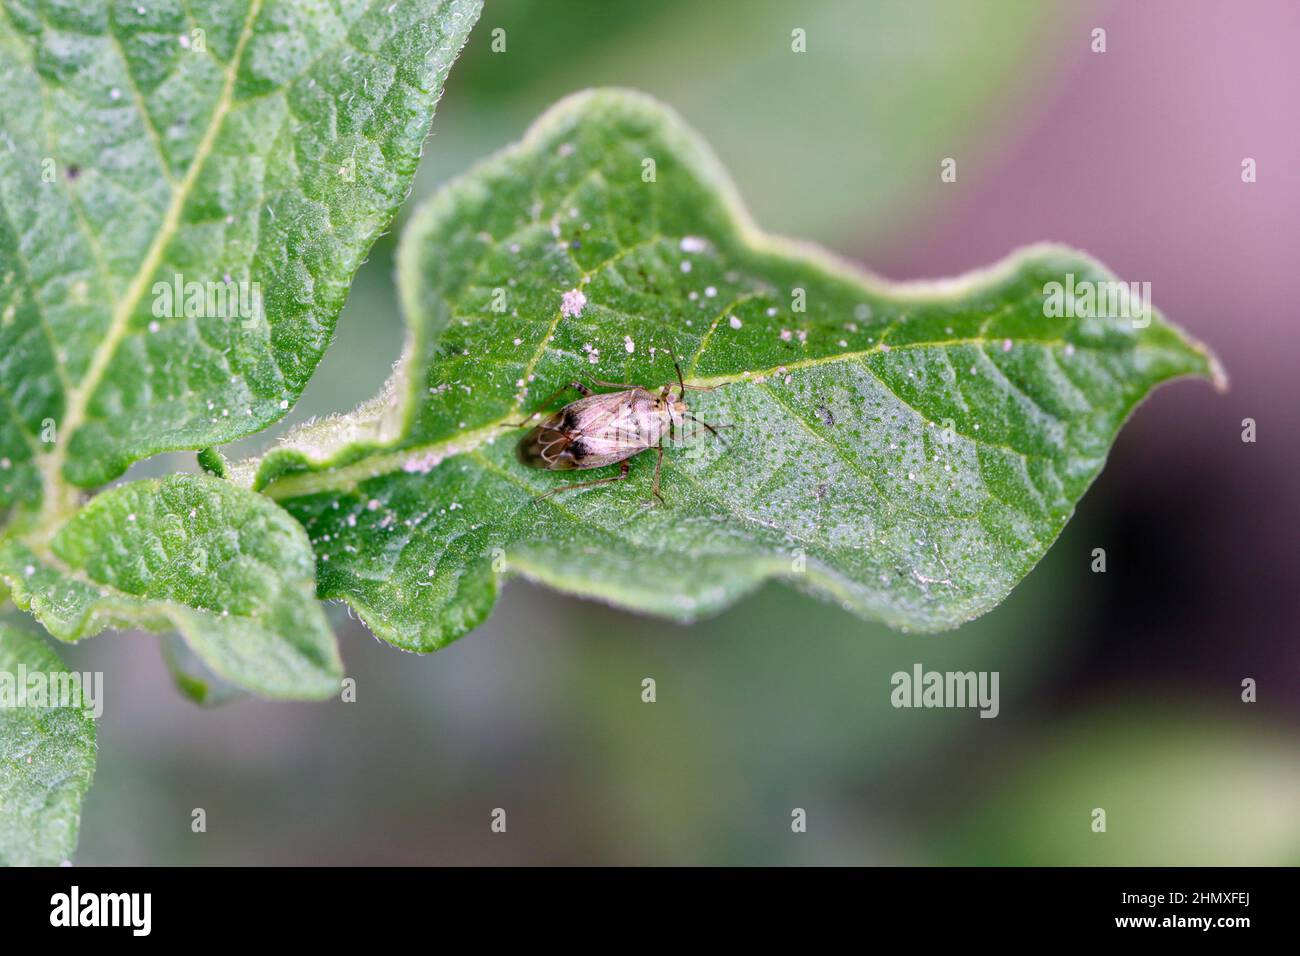 Capsid Bug Miridae. Ein Insekt auf einem kartoffelgrünen Blatt. Stockfoto